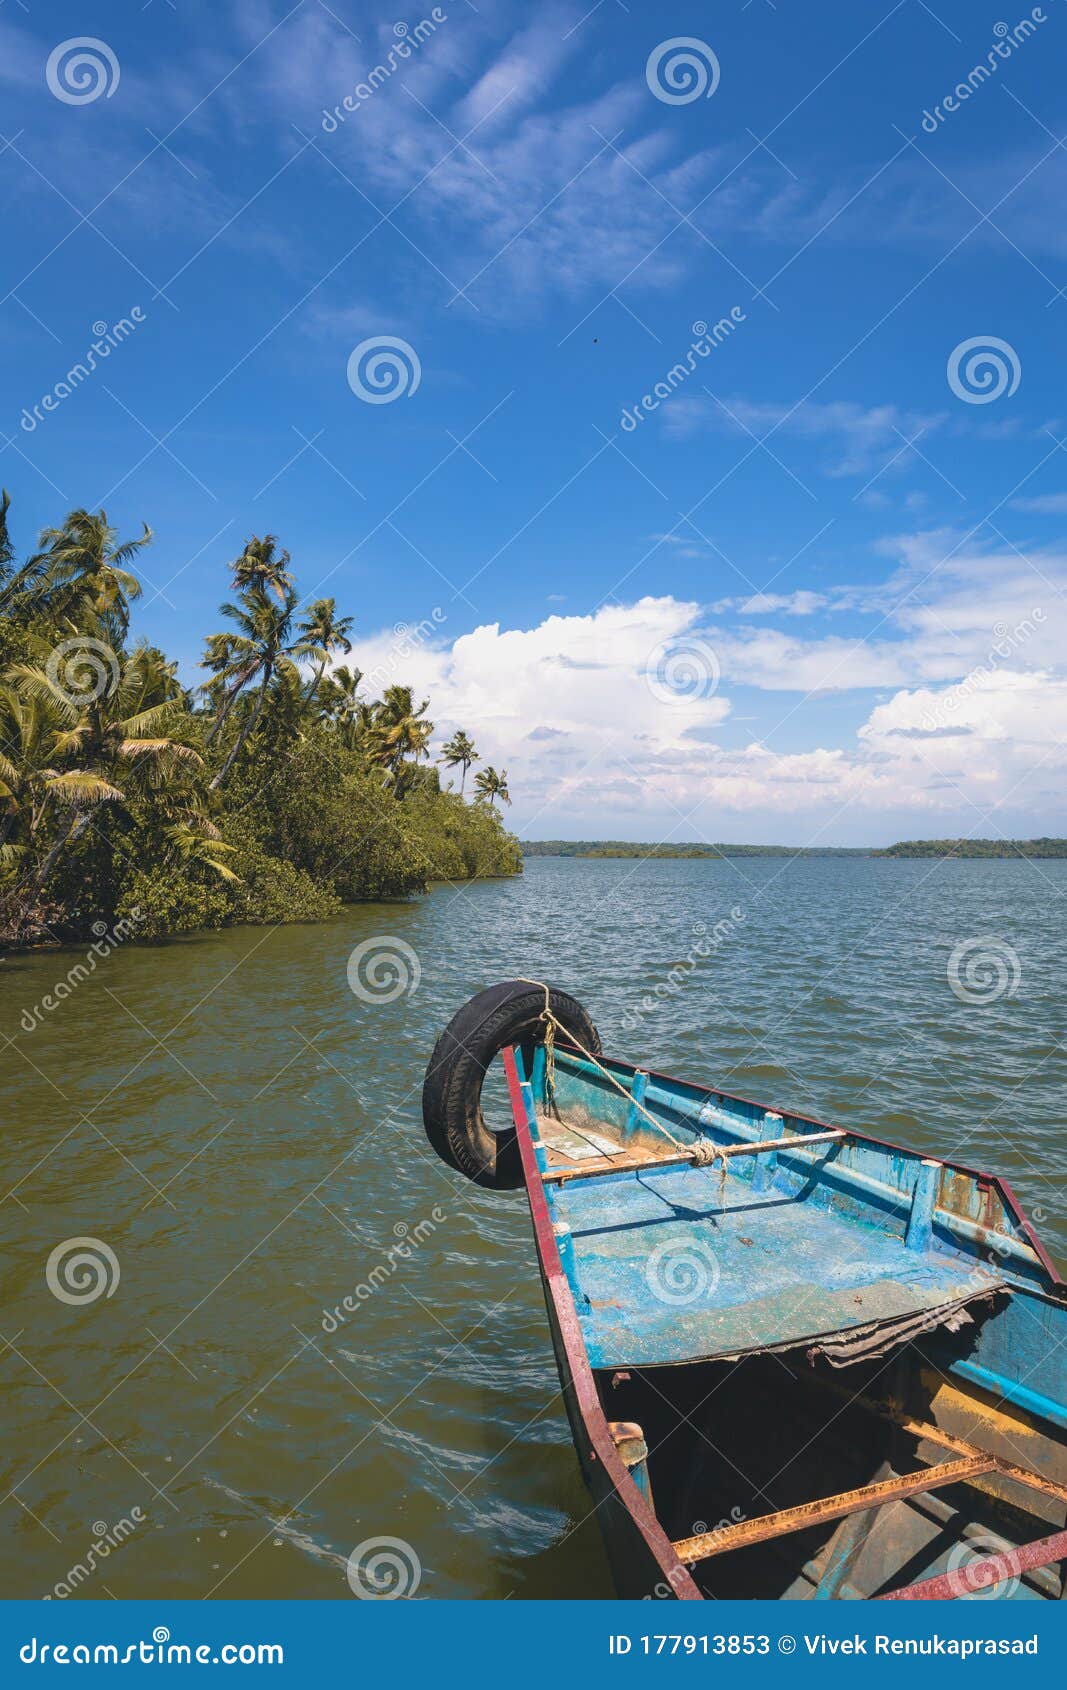 boating at kollam, kerala, india.